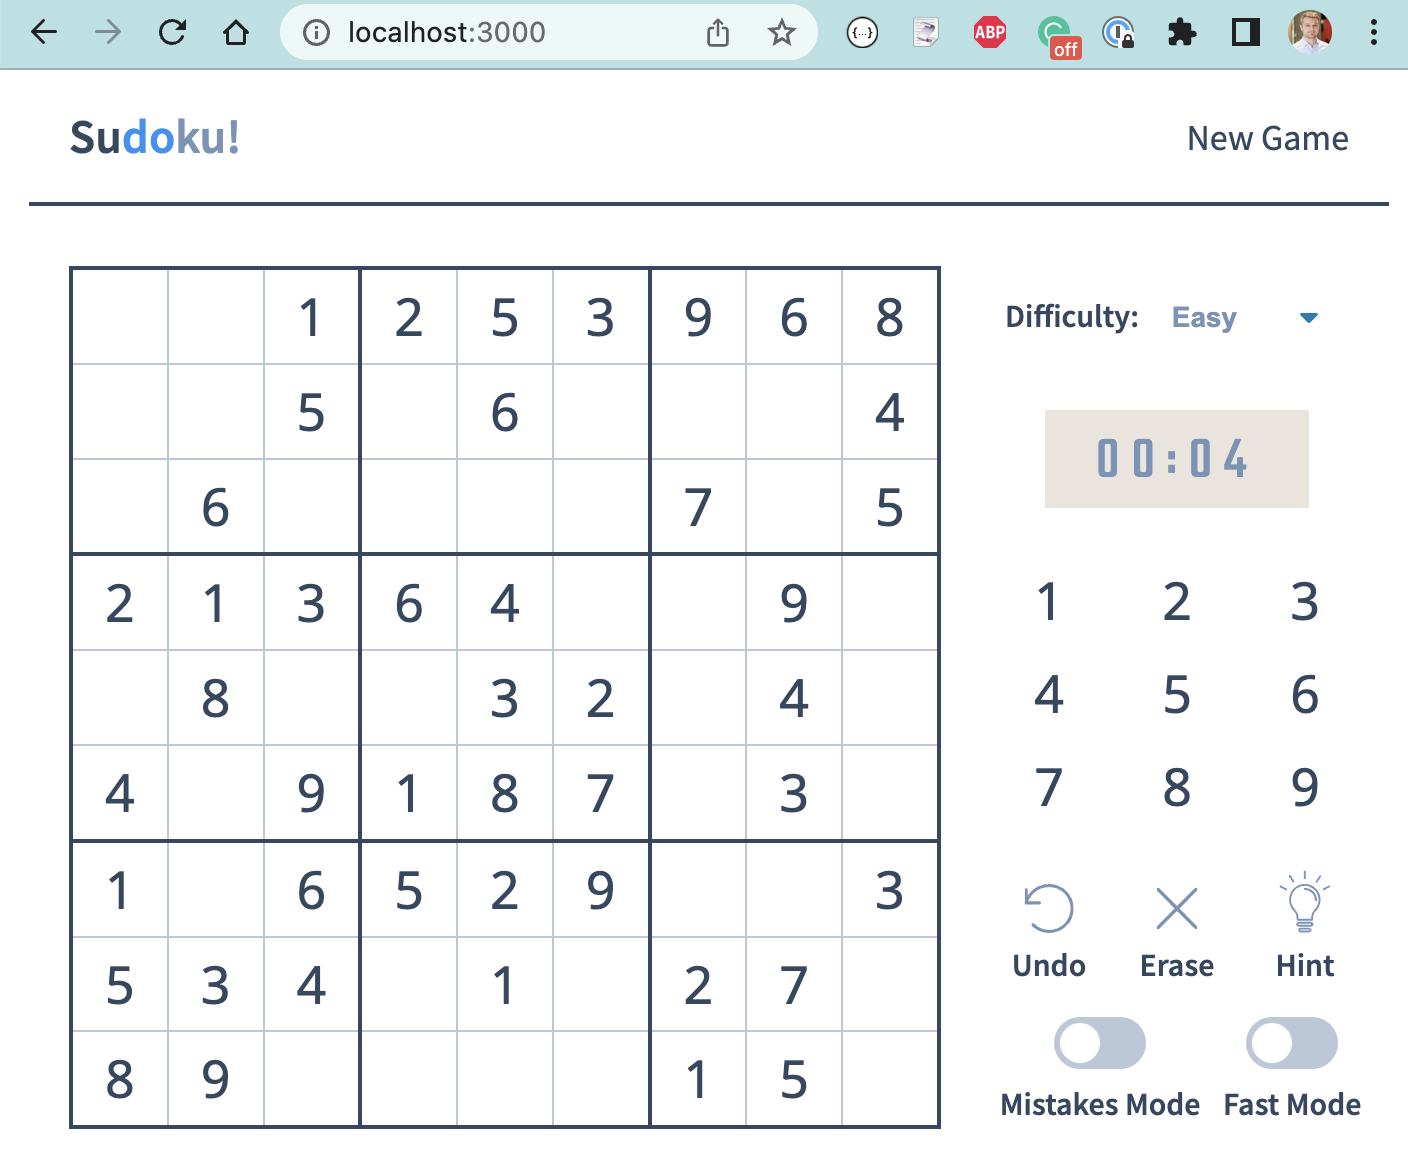 Sudoku application running locally